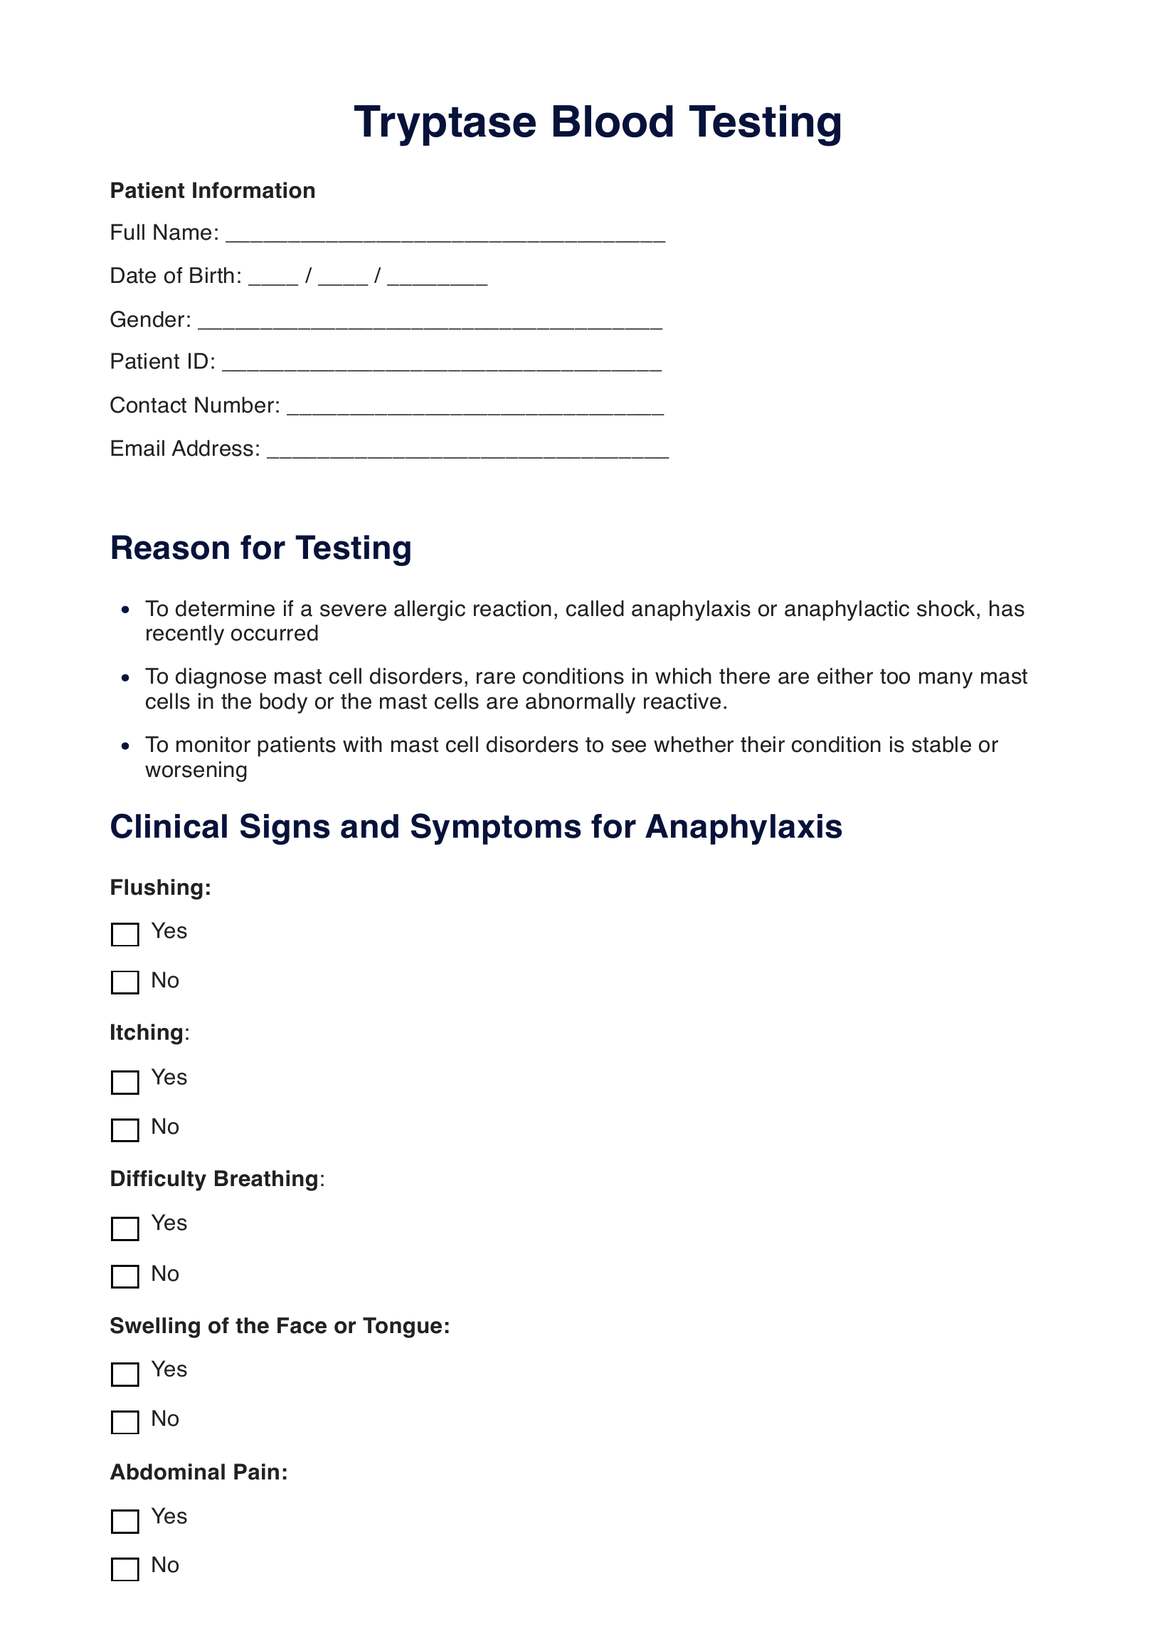 Tryptase Blood Test PDF Example